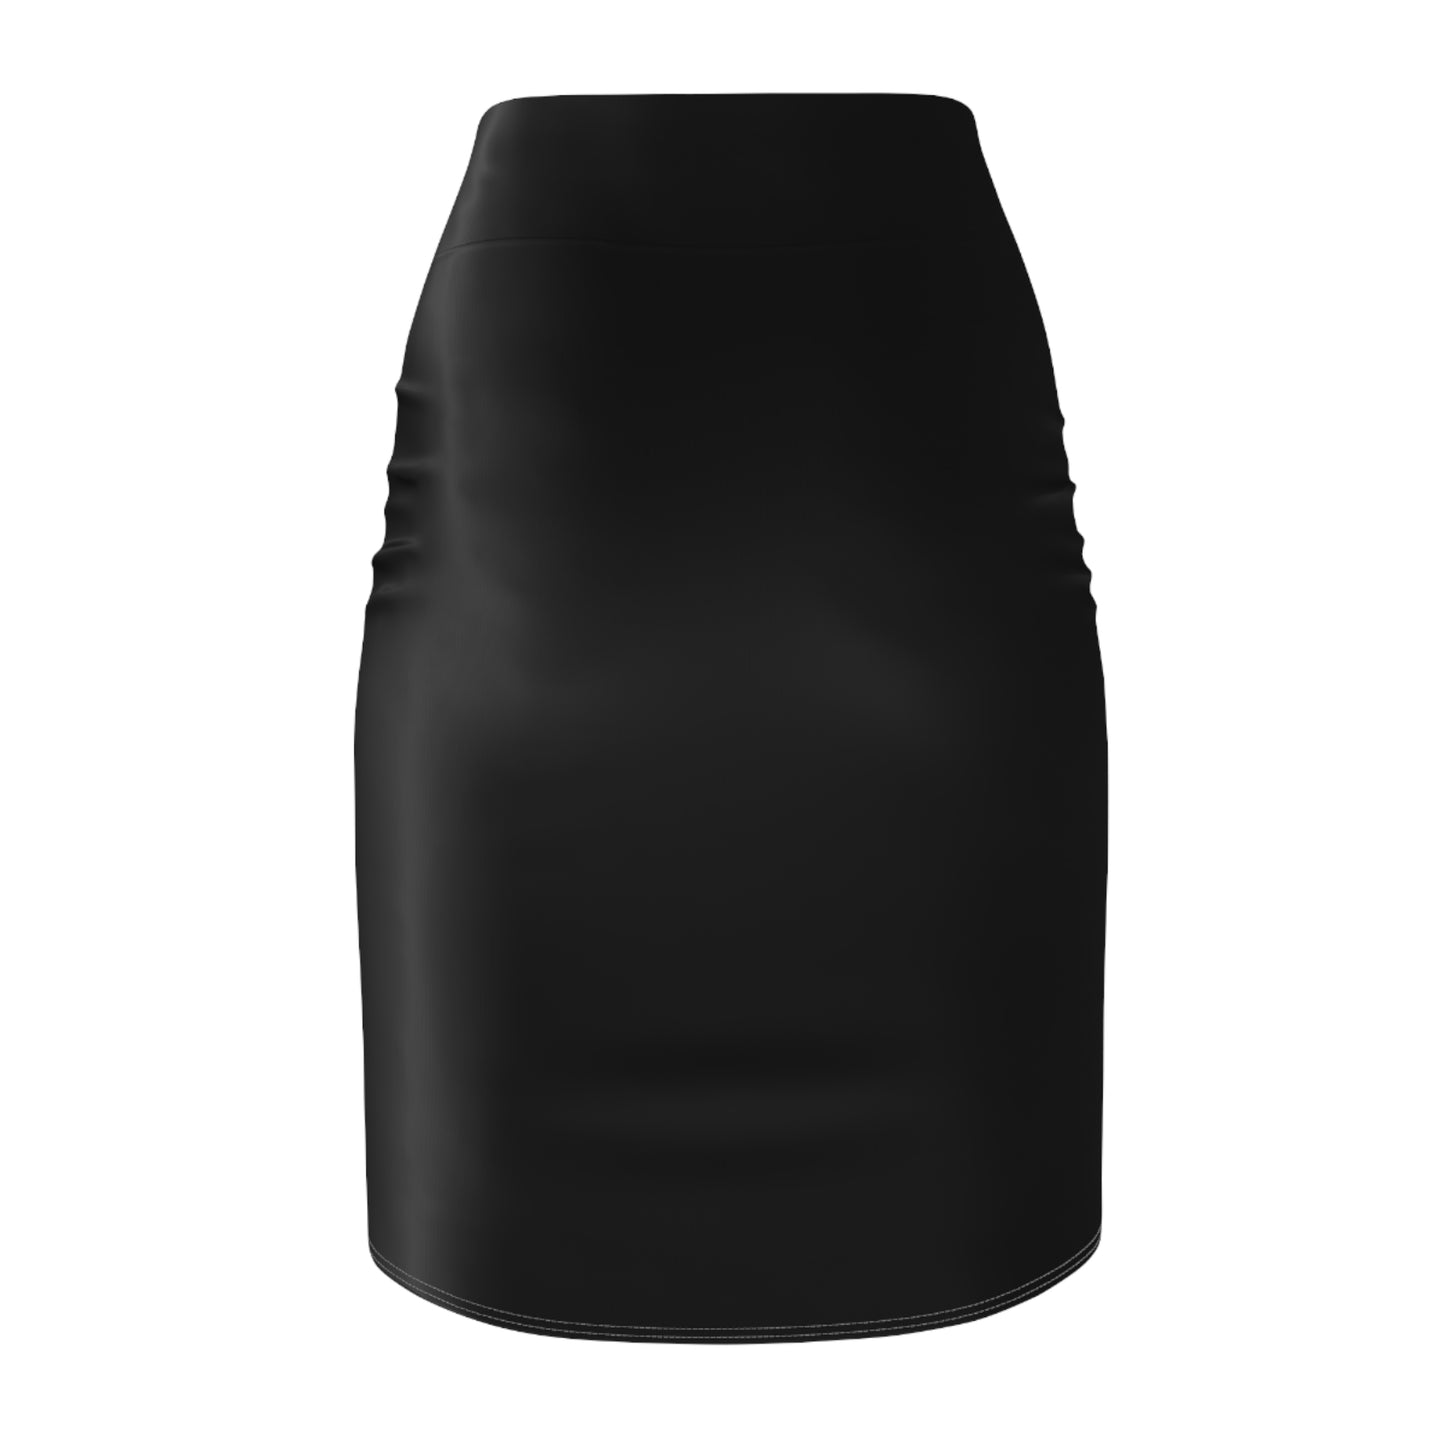 Solid Black Women's Pencil Skirt (AOP), High Quality & Stylish Pencil Skirt